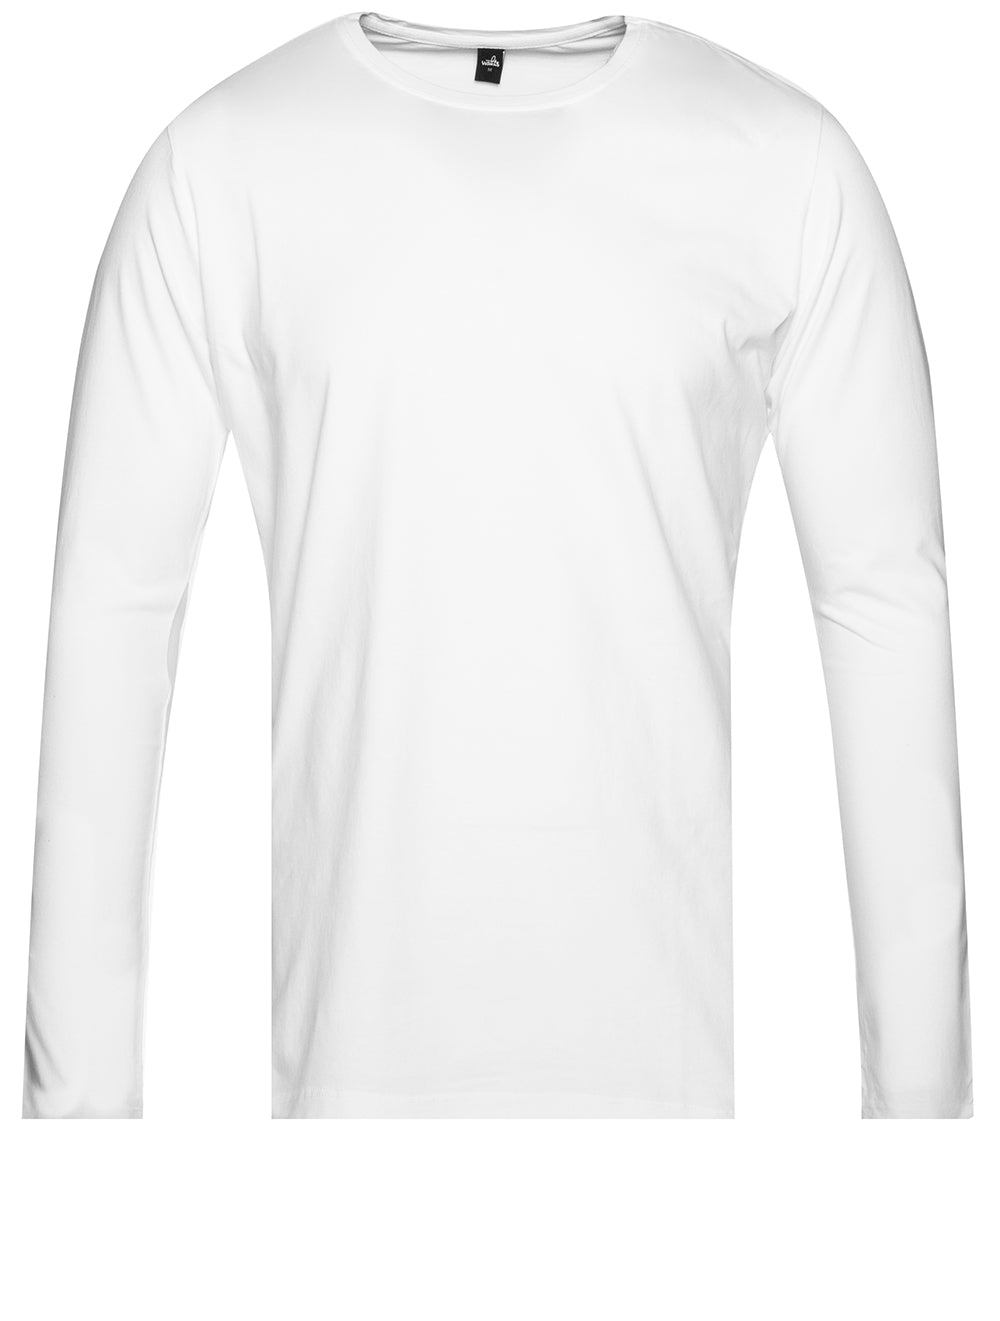 Wahts Longsleeve T-shirt White